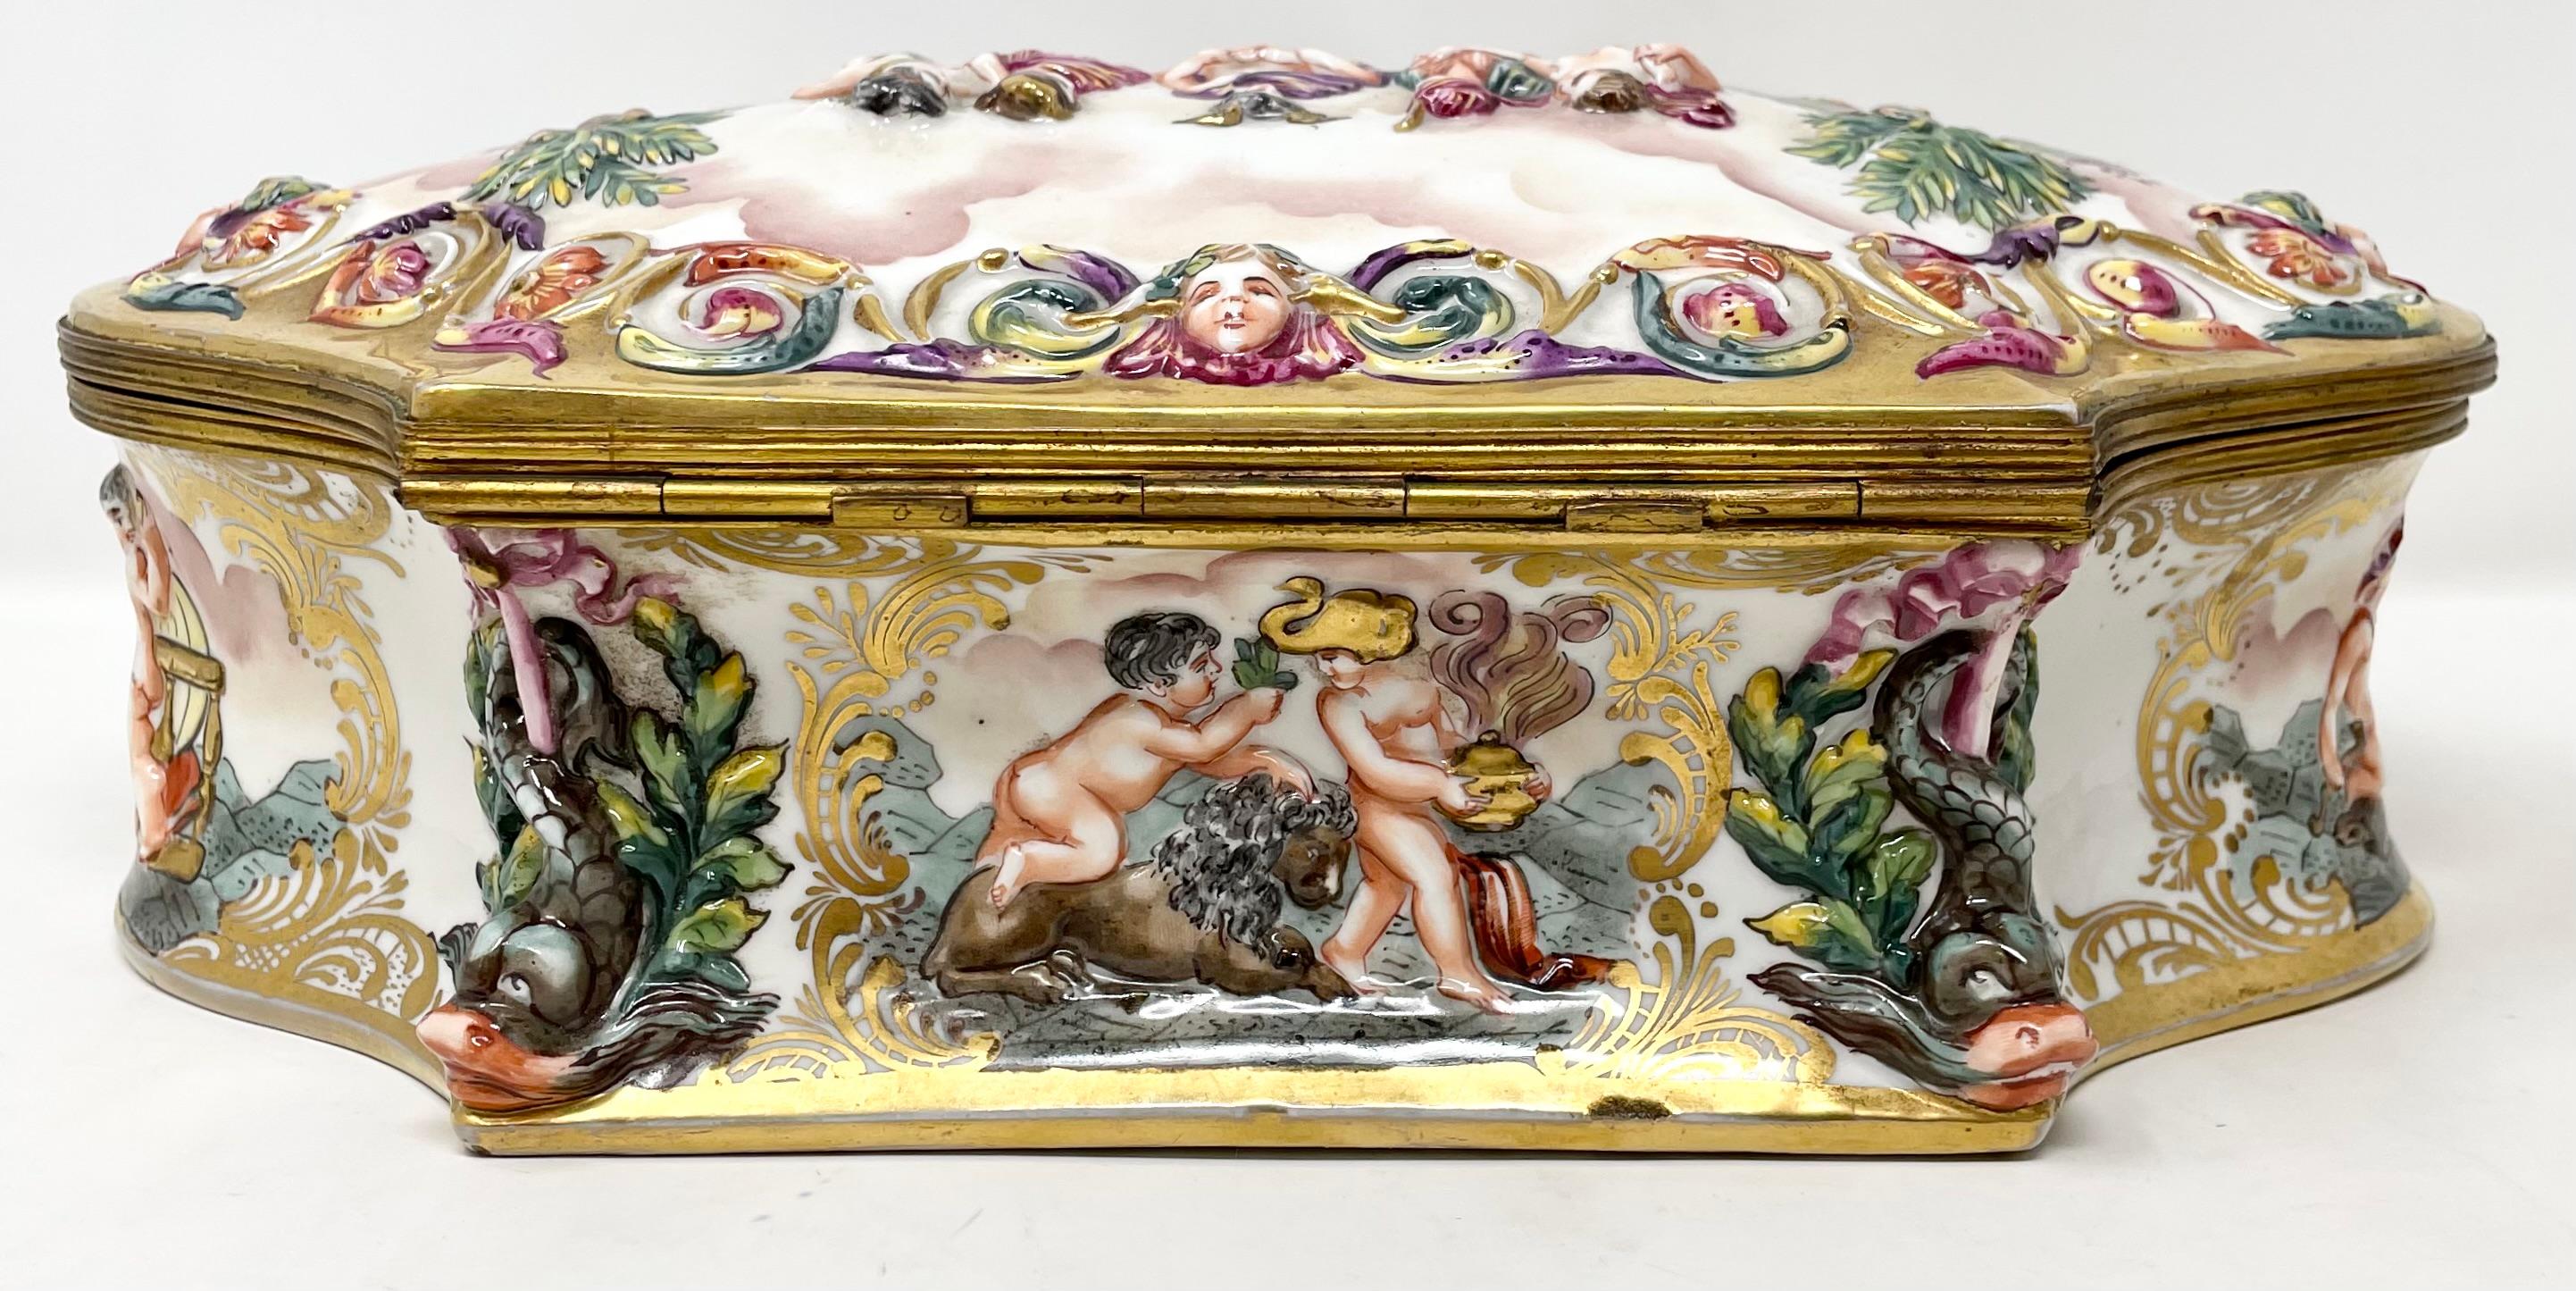 Large Antique Italian Capo di Monte Hand-Painted Porcelain Jewel Box circa 1900. For Sale 1